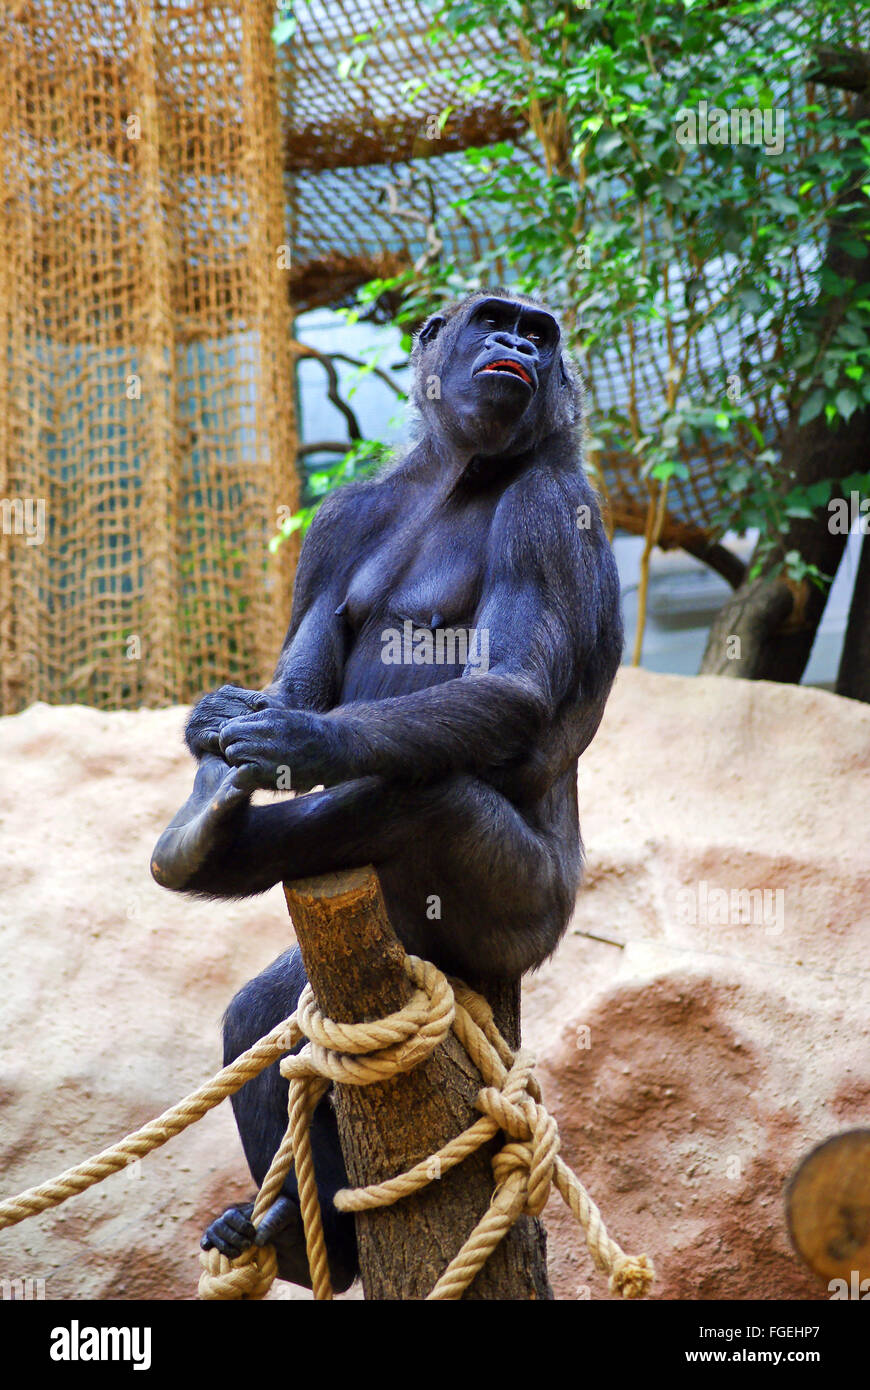 Gorilla in Sitting Pose stock photo. Image of green - 219115150